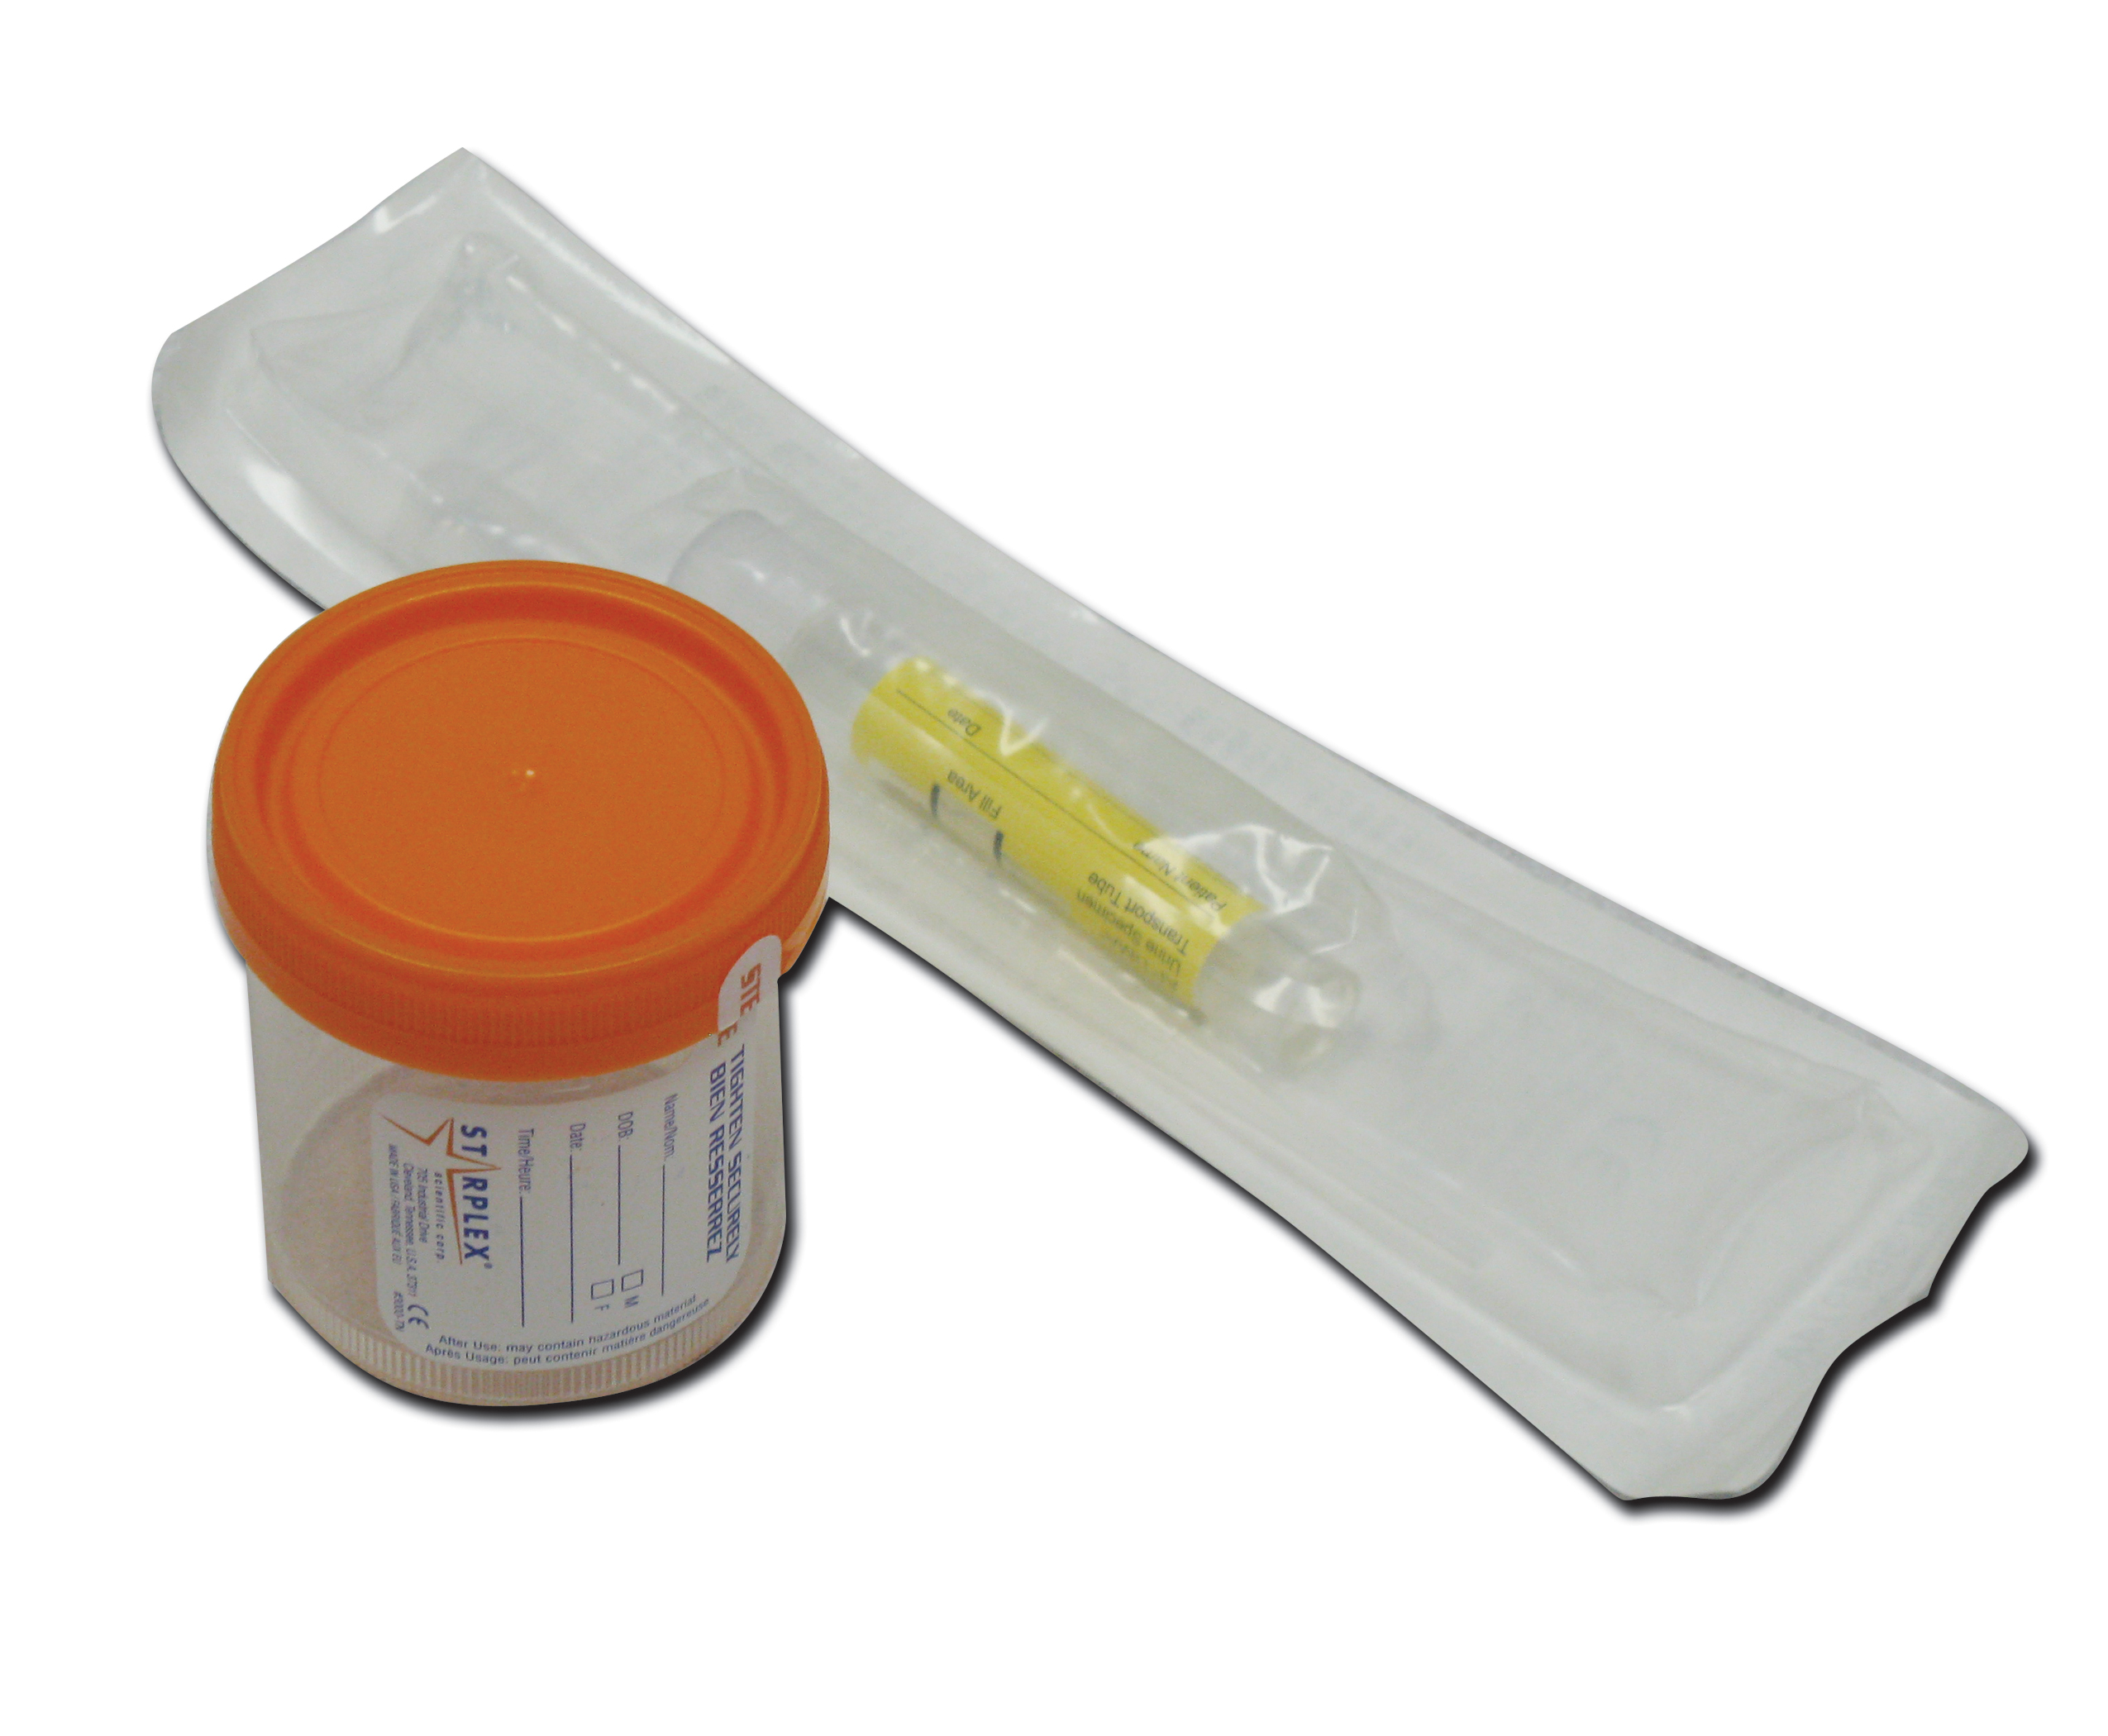 urine sample cup and STI test